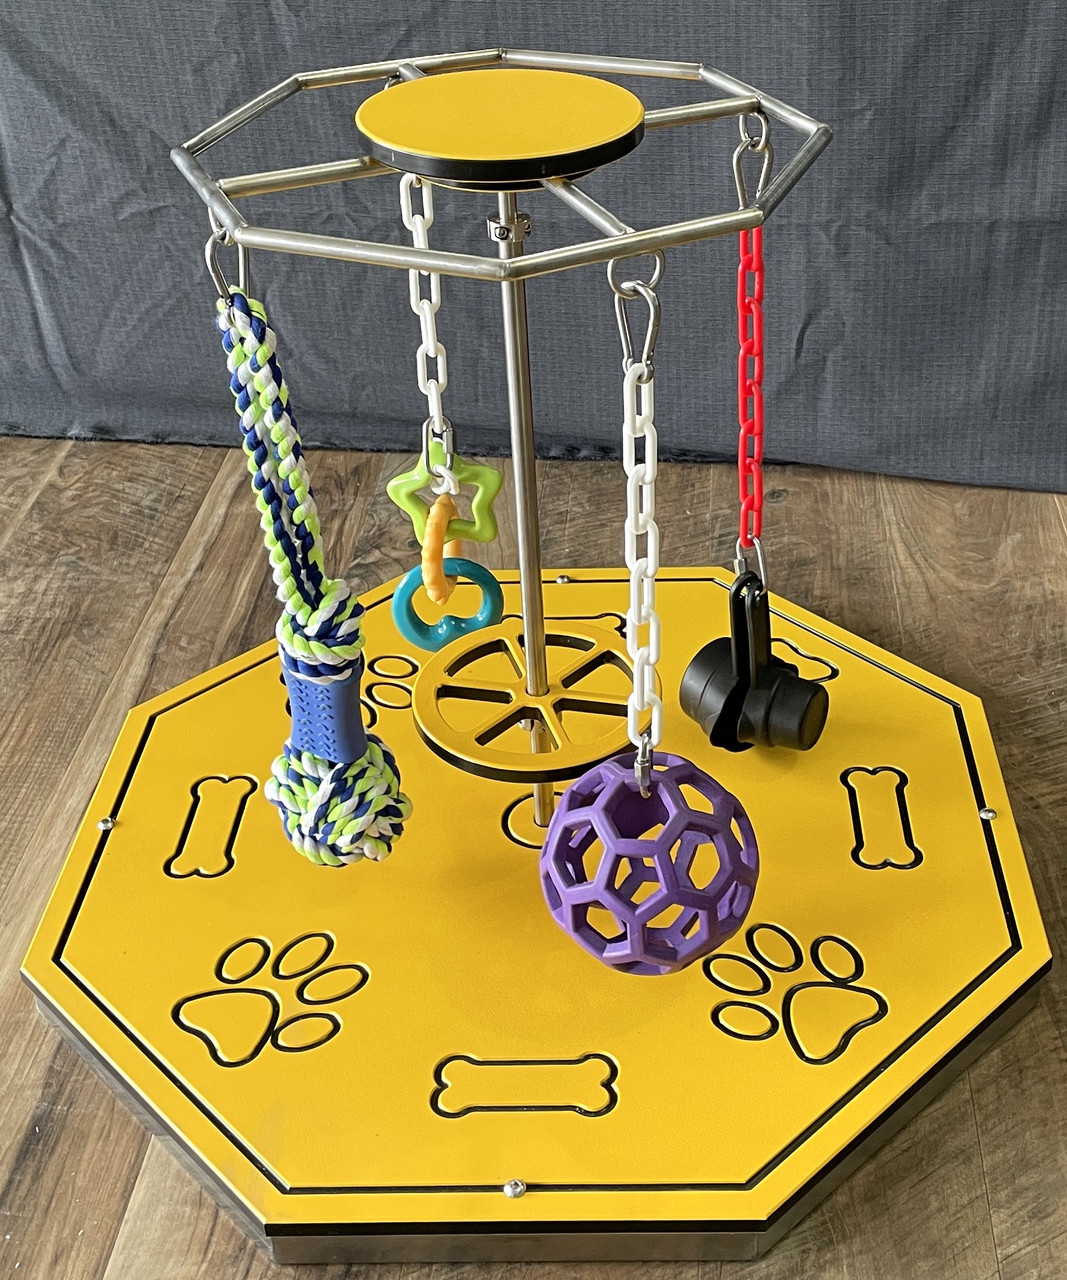 Doggie Fidget Deluxe Interactive Puppy Carousel Toy